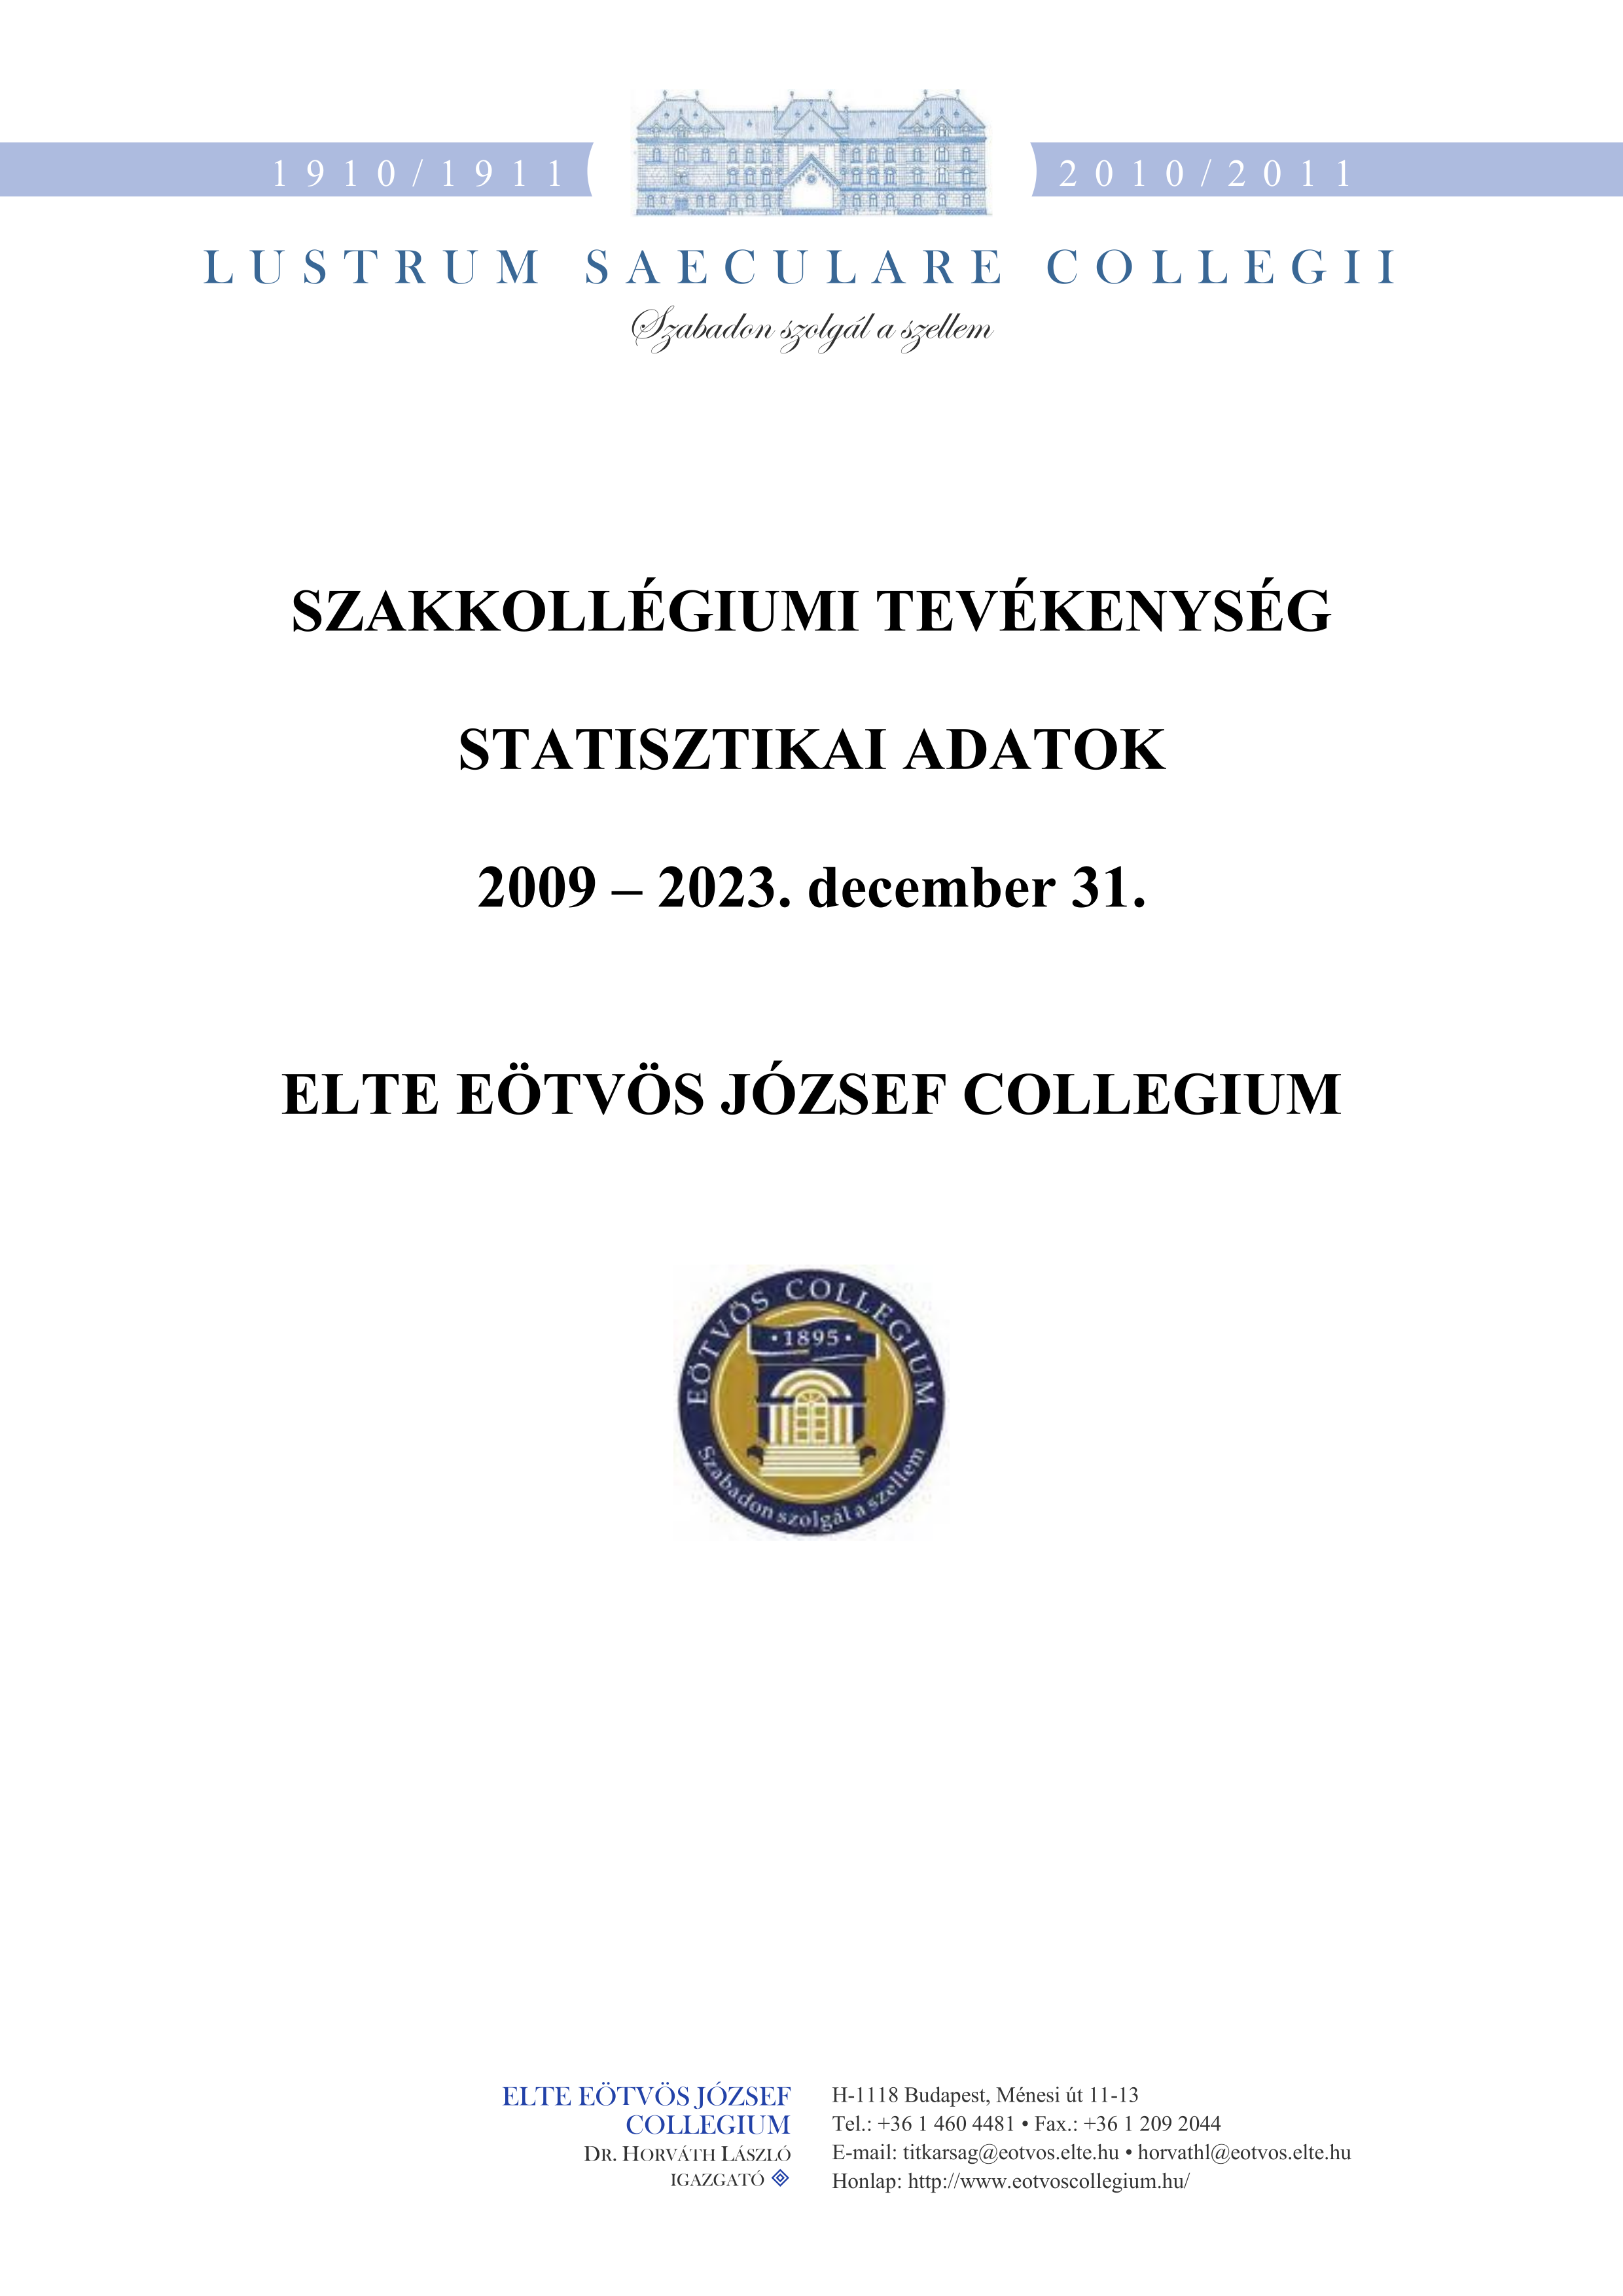 ELTE Eötvös József Collegium (2009-202.) statisztika